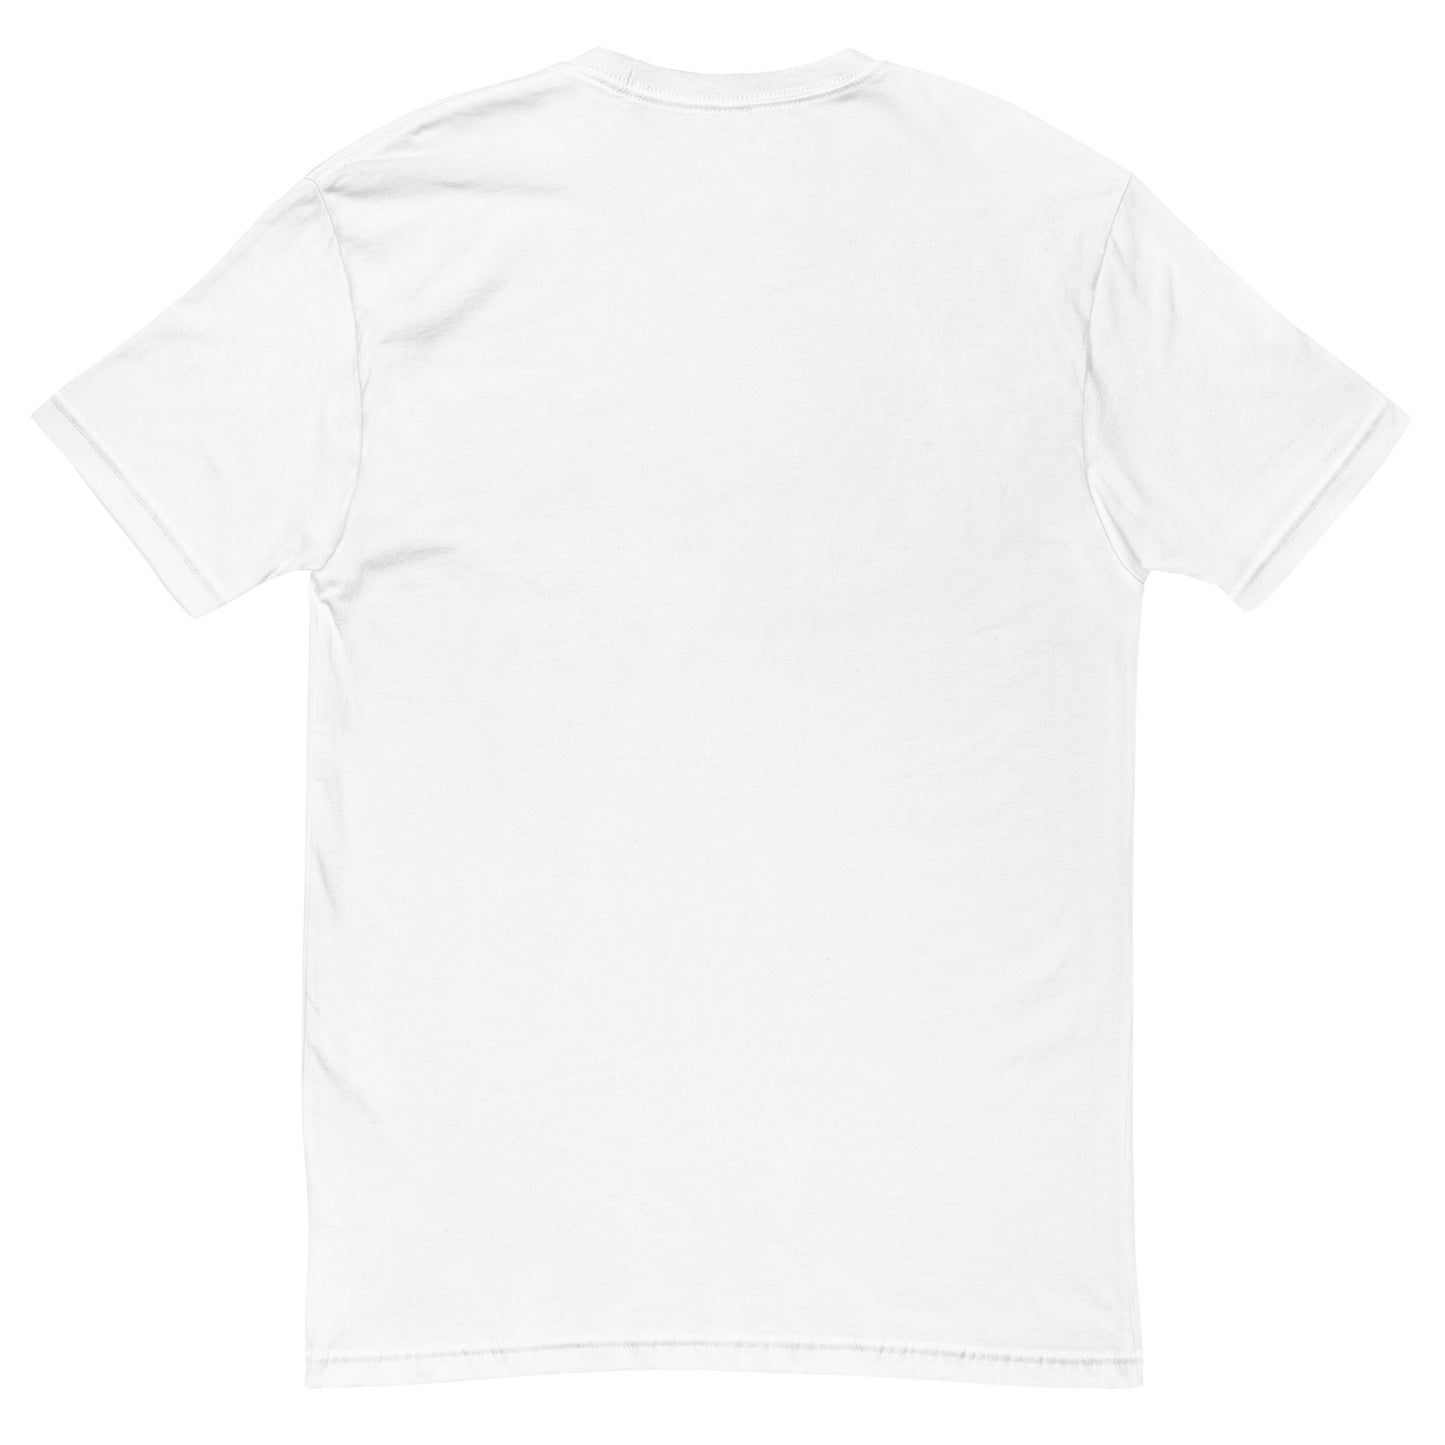 VAZZARI: Fitted T-shirt: Casual Smart, Cotton Thread - Vazzari Couture